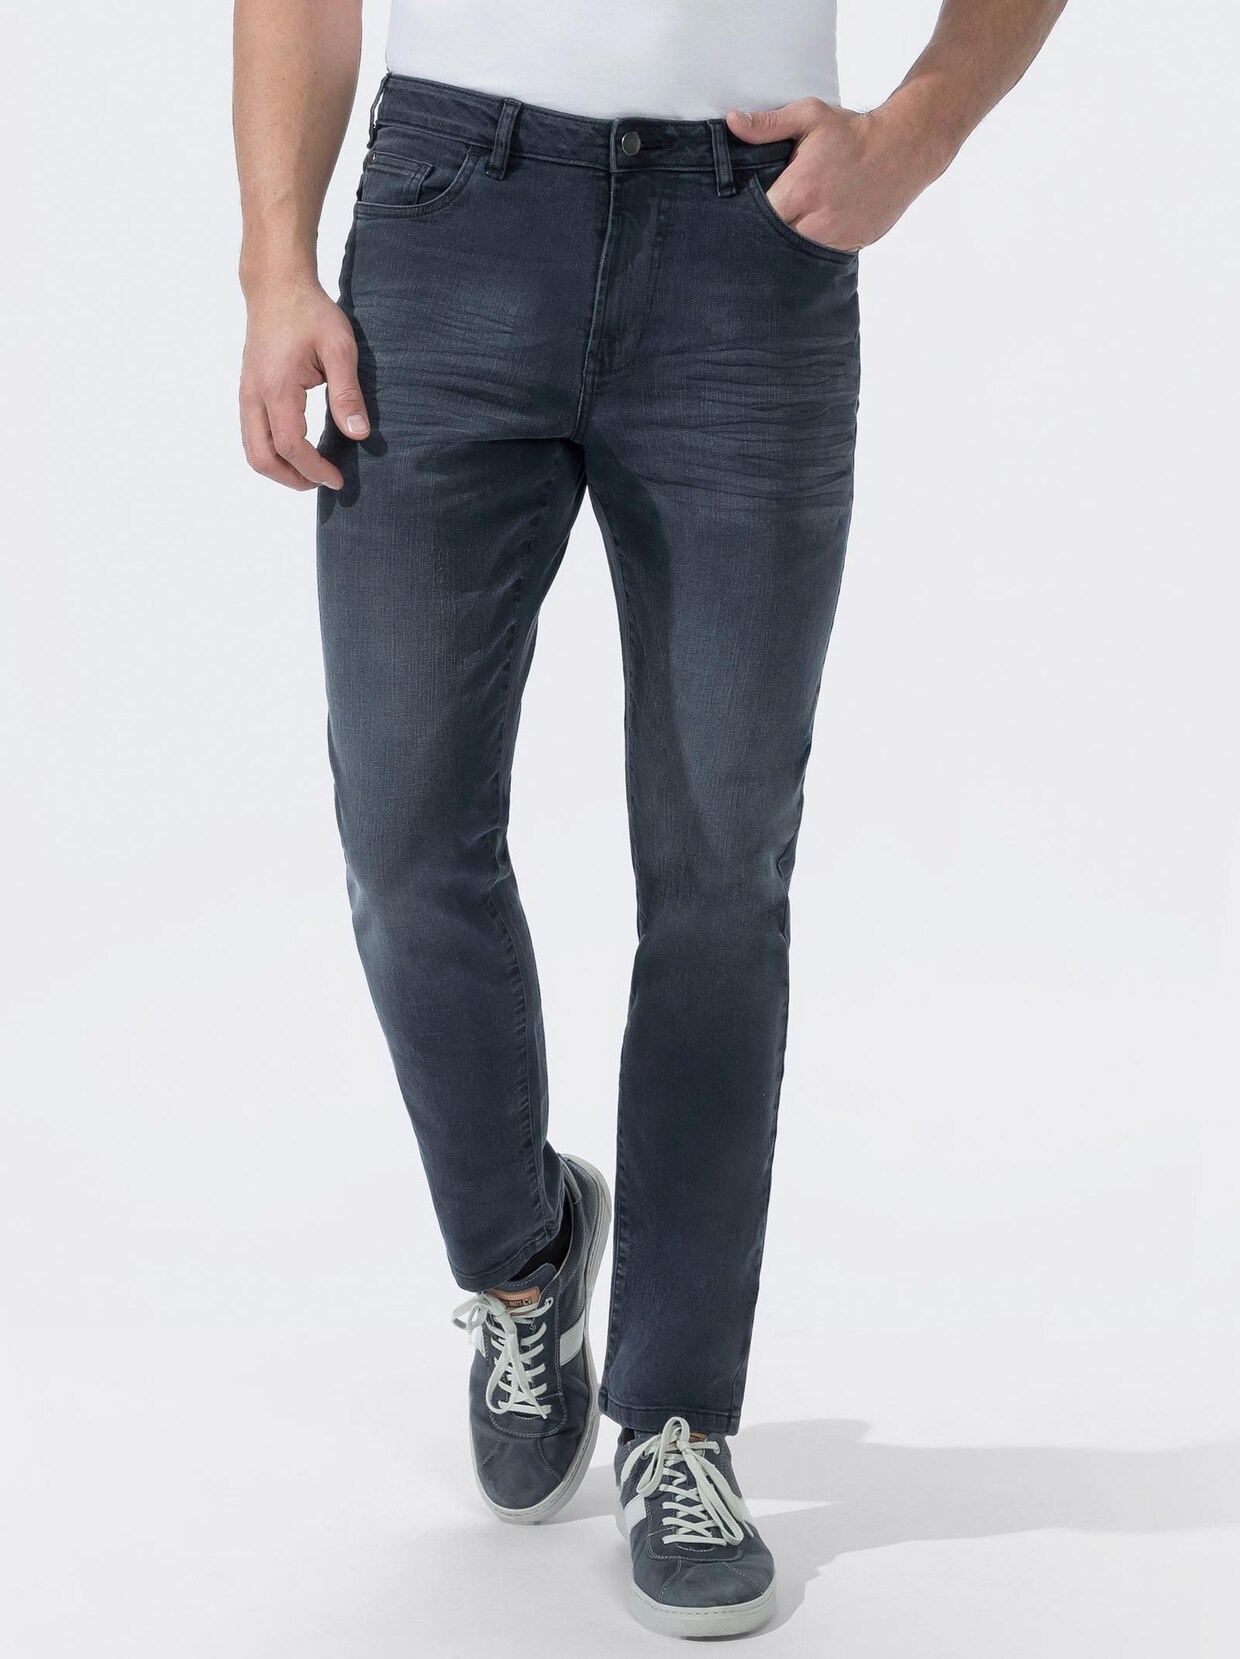 Marco Donati Jeans - dark blue-denim